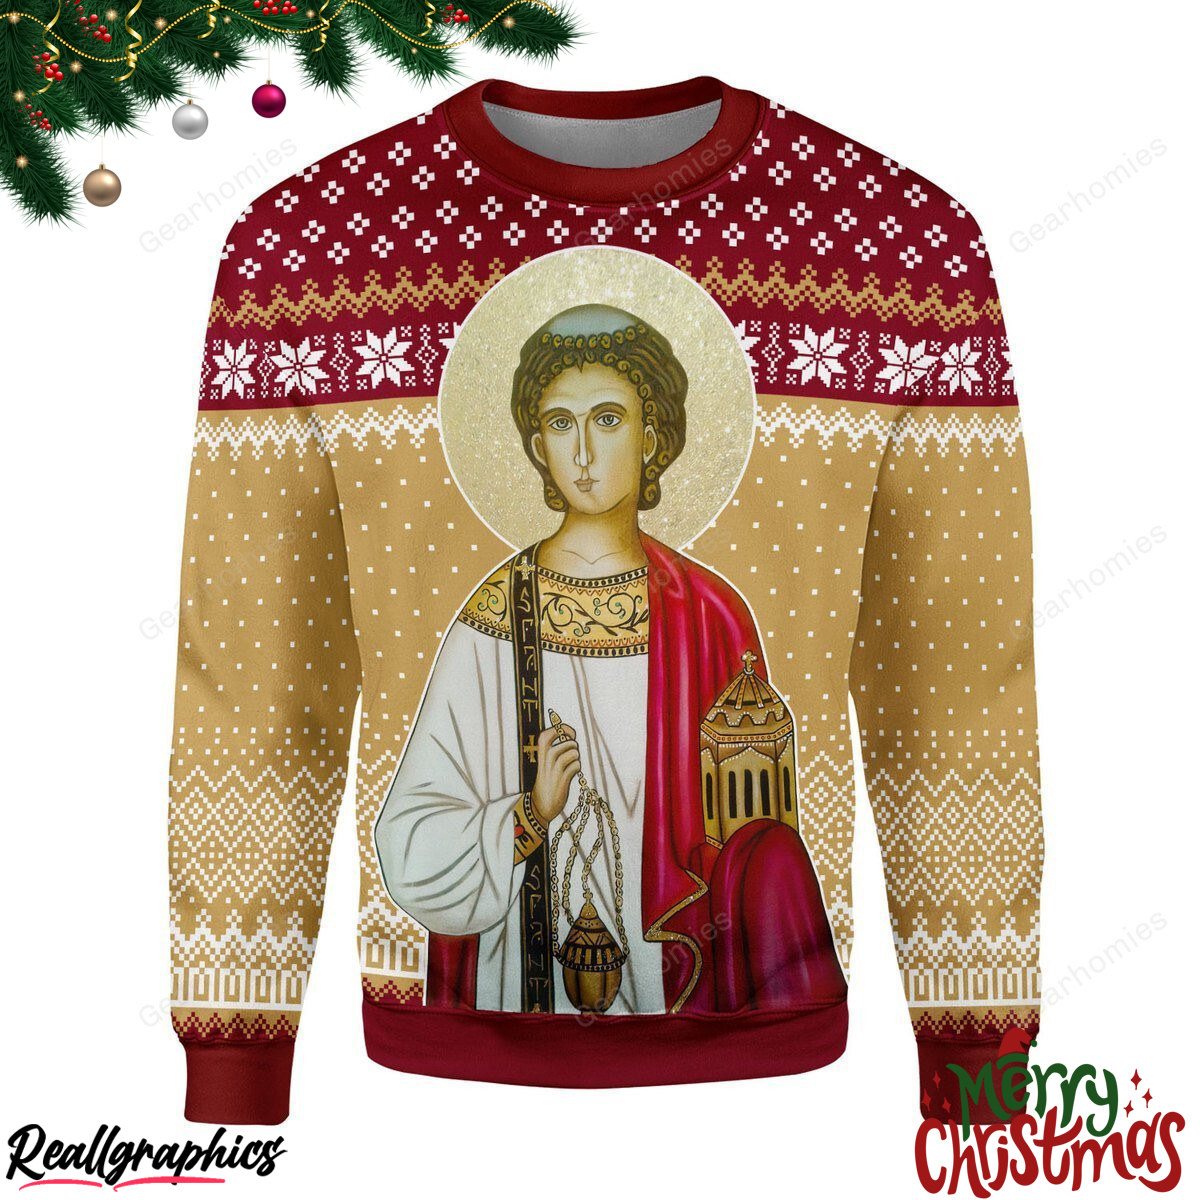 saint stefan all over print ugly sweatshirt, sweater